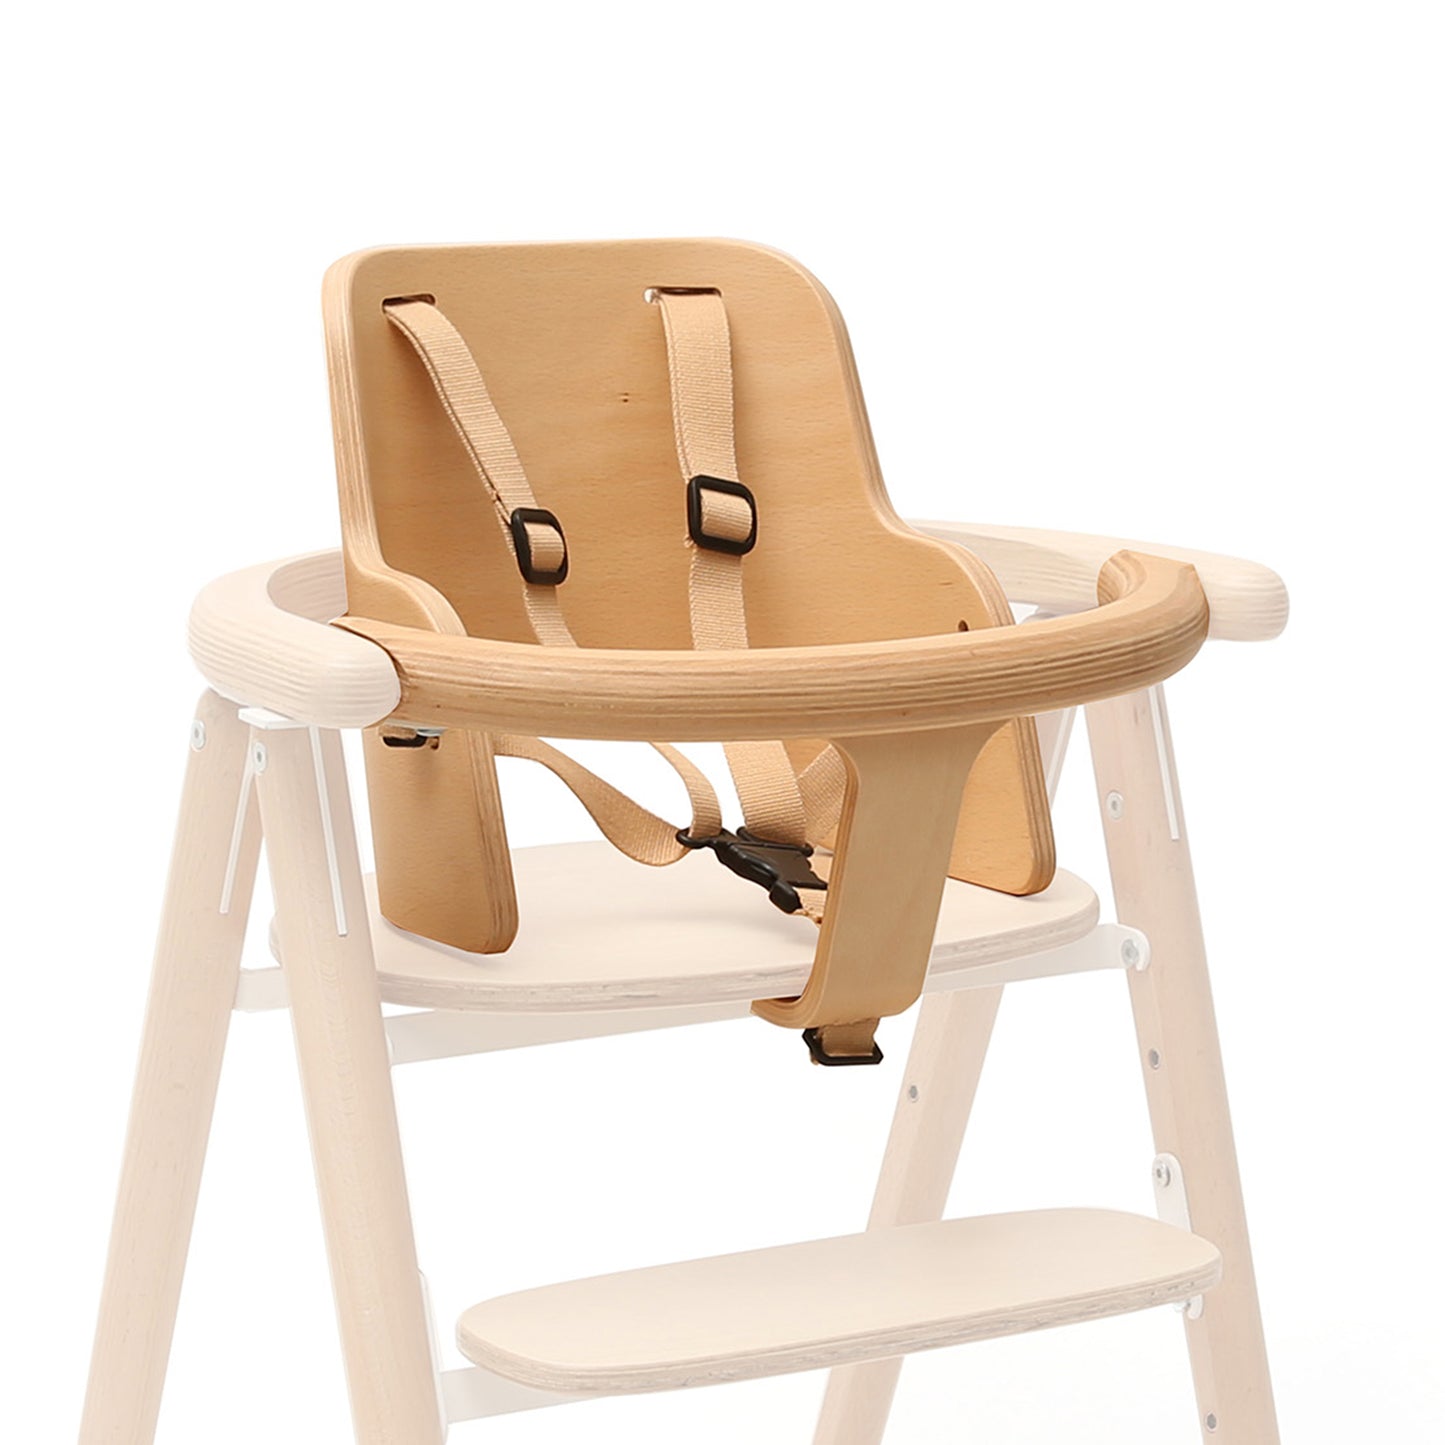 Charlie Crane Charlie Crane Babyset voor Kinderstoel TOBO - Natural - Decomusy